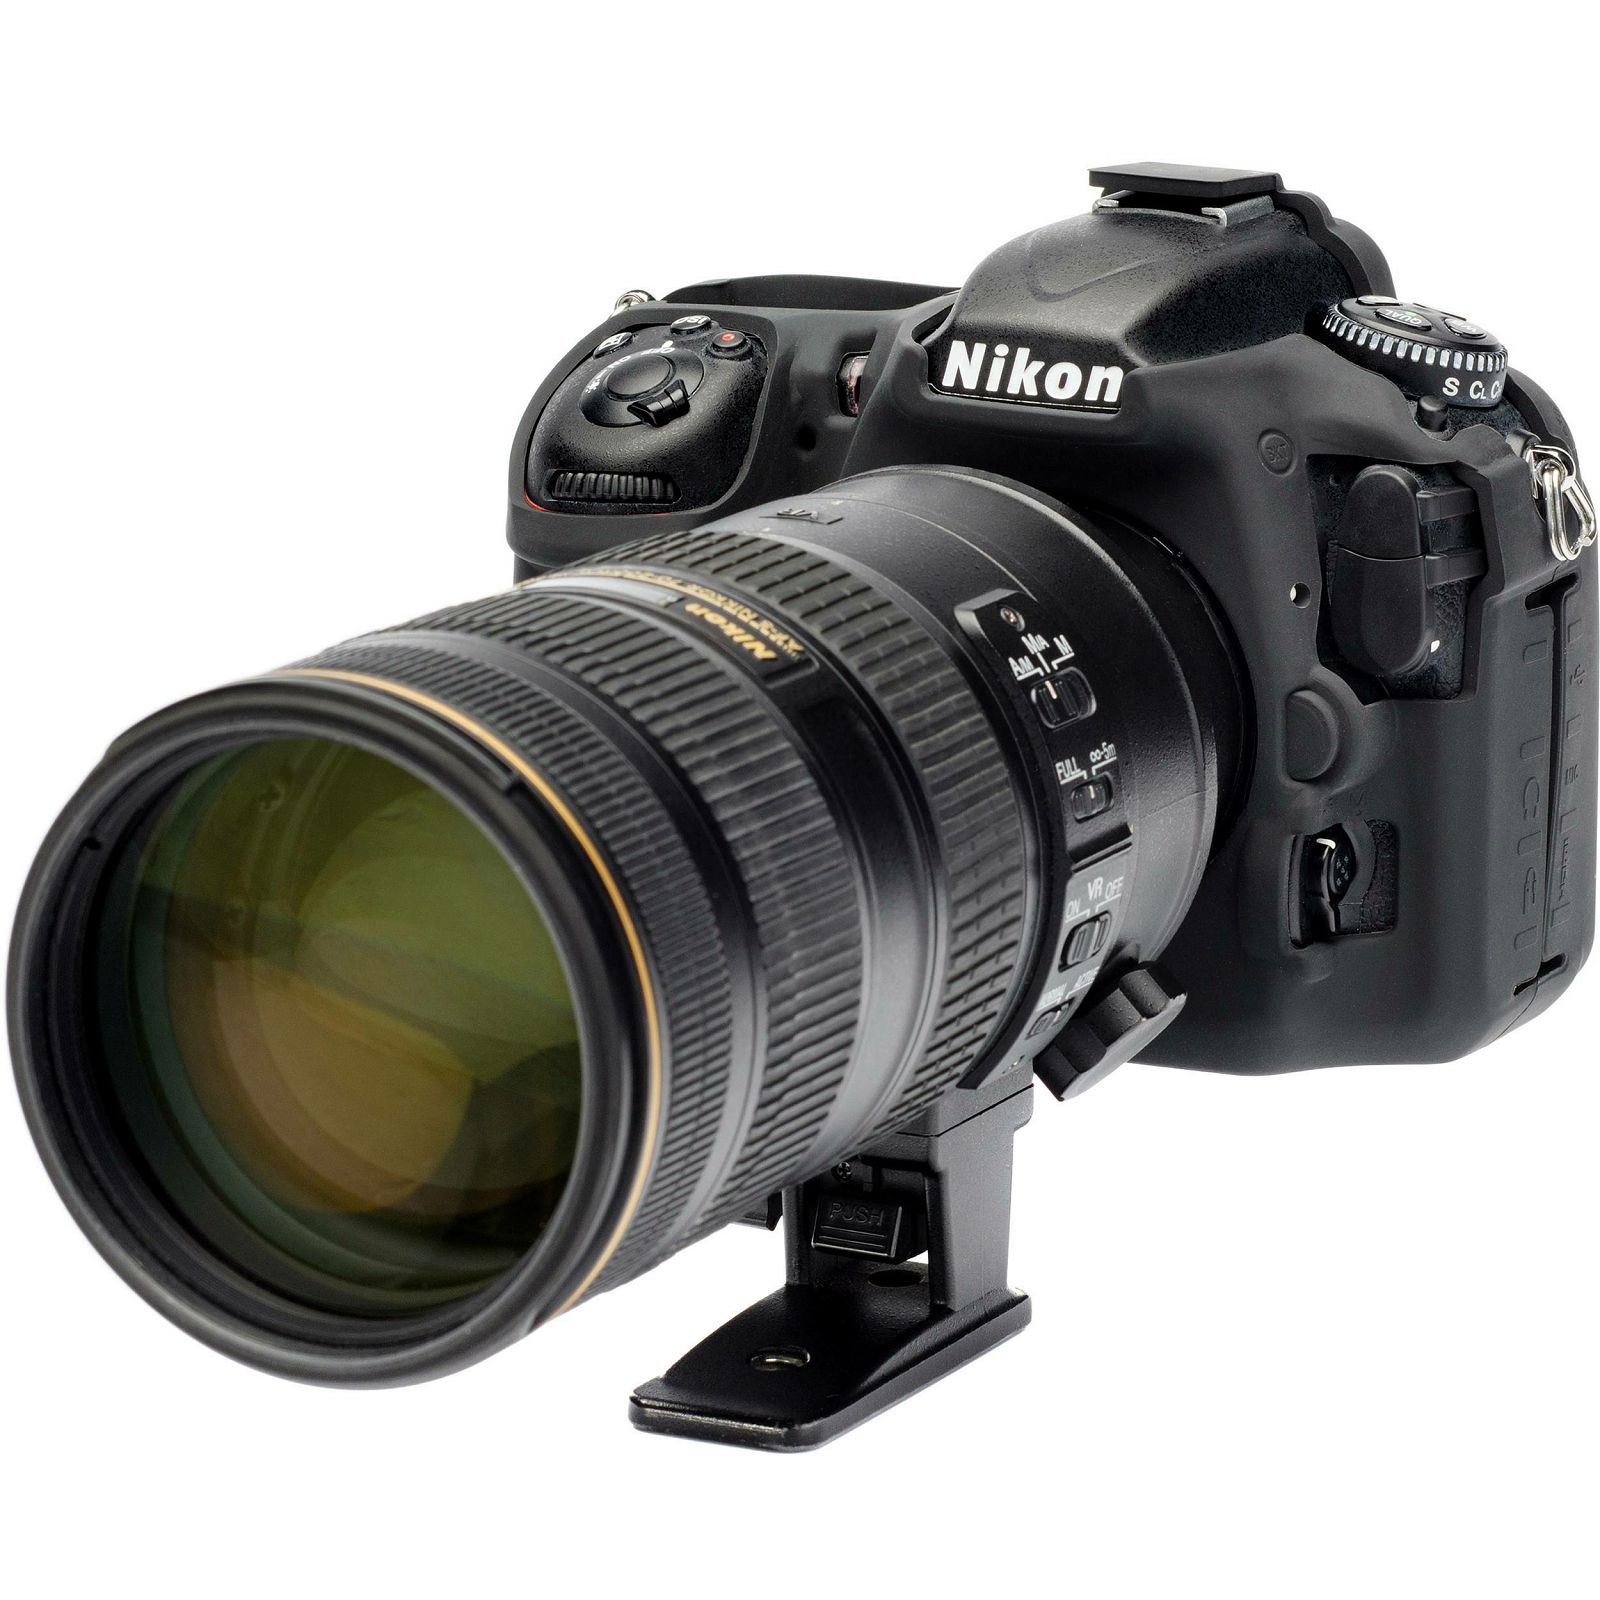 Discovered easyCover za Nikon D500 Black crno gumeno zaštitno kućište camera case (ECND500B)